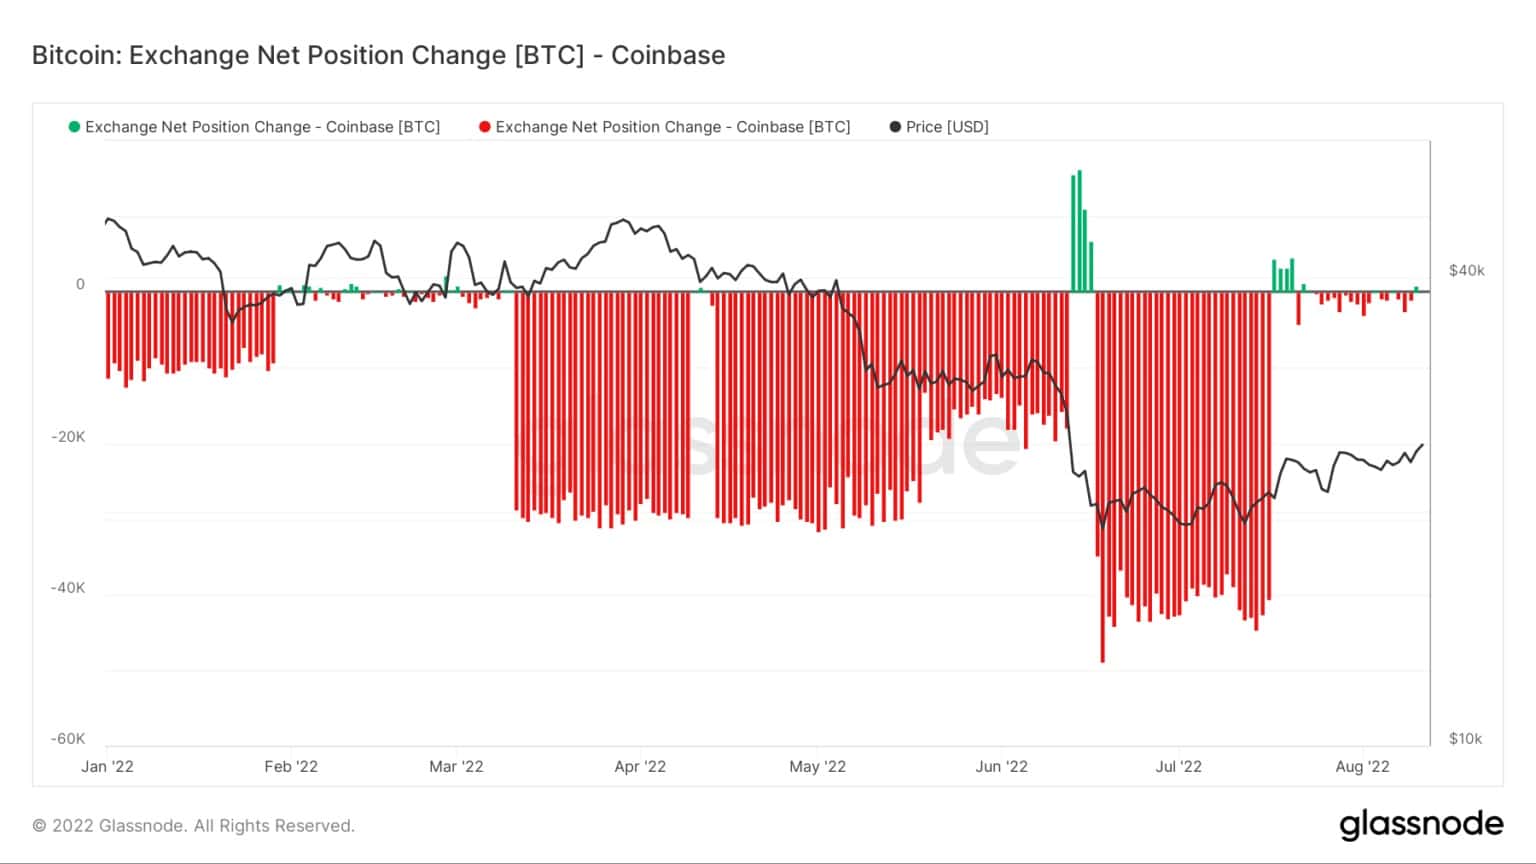 Bitcoin Exchange Net Position Change (Source : Glassnode)